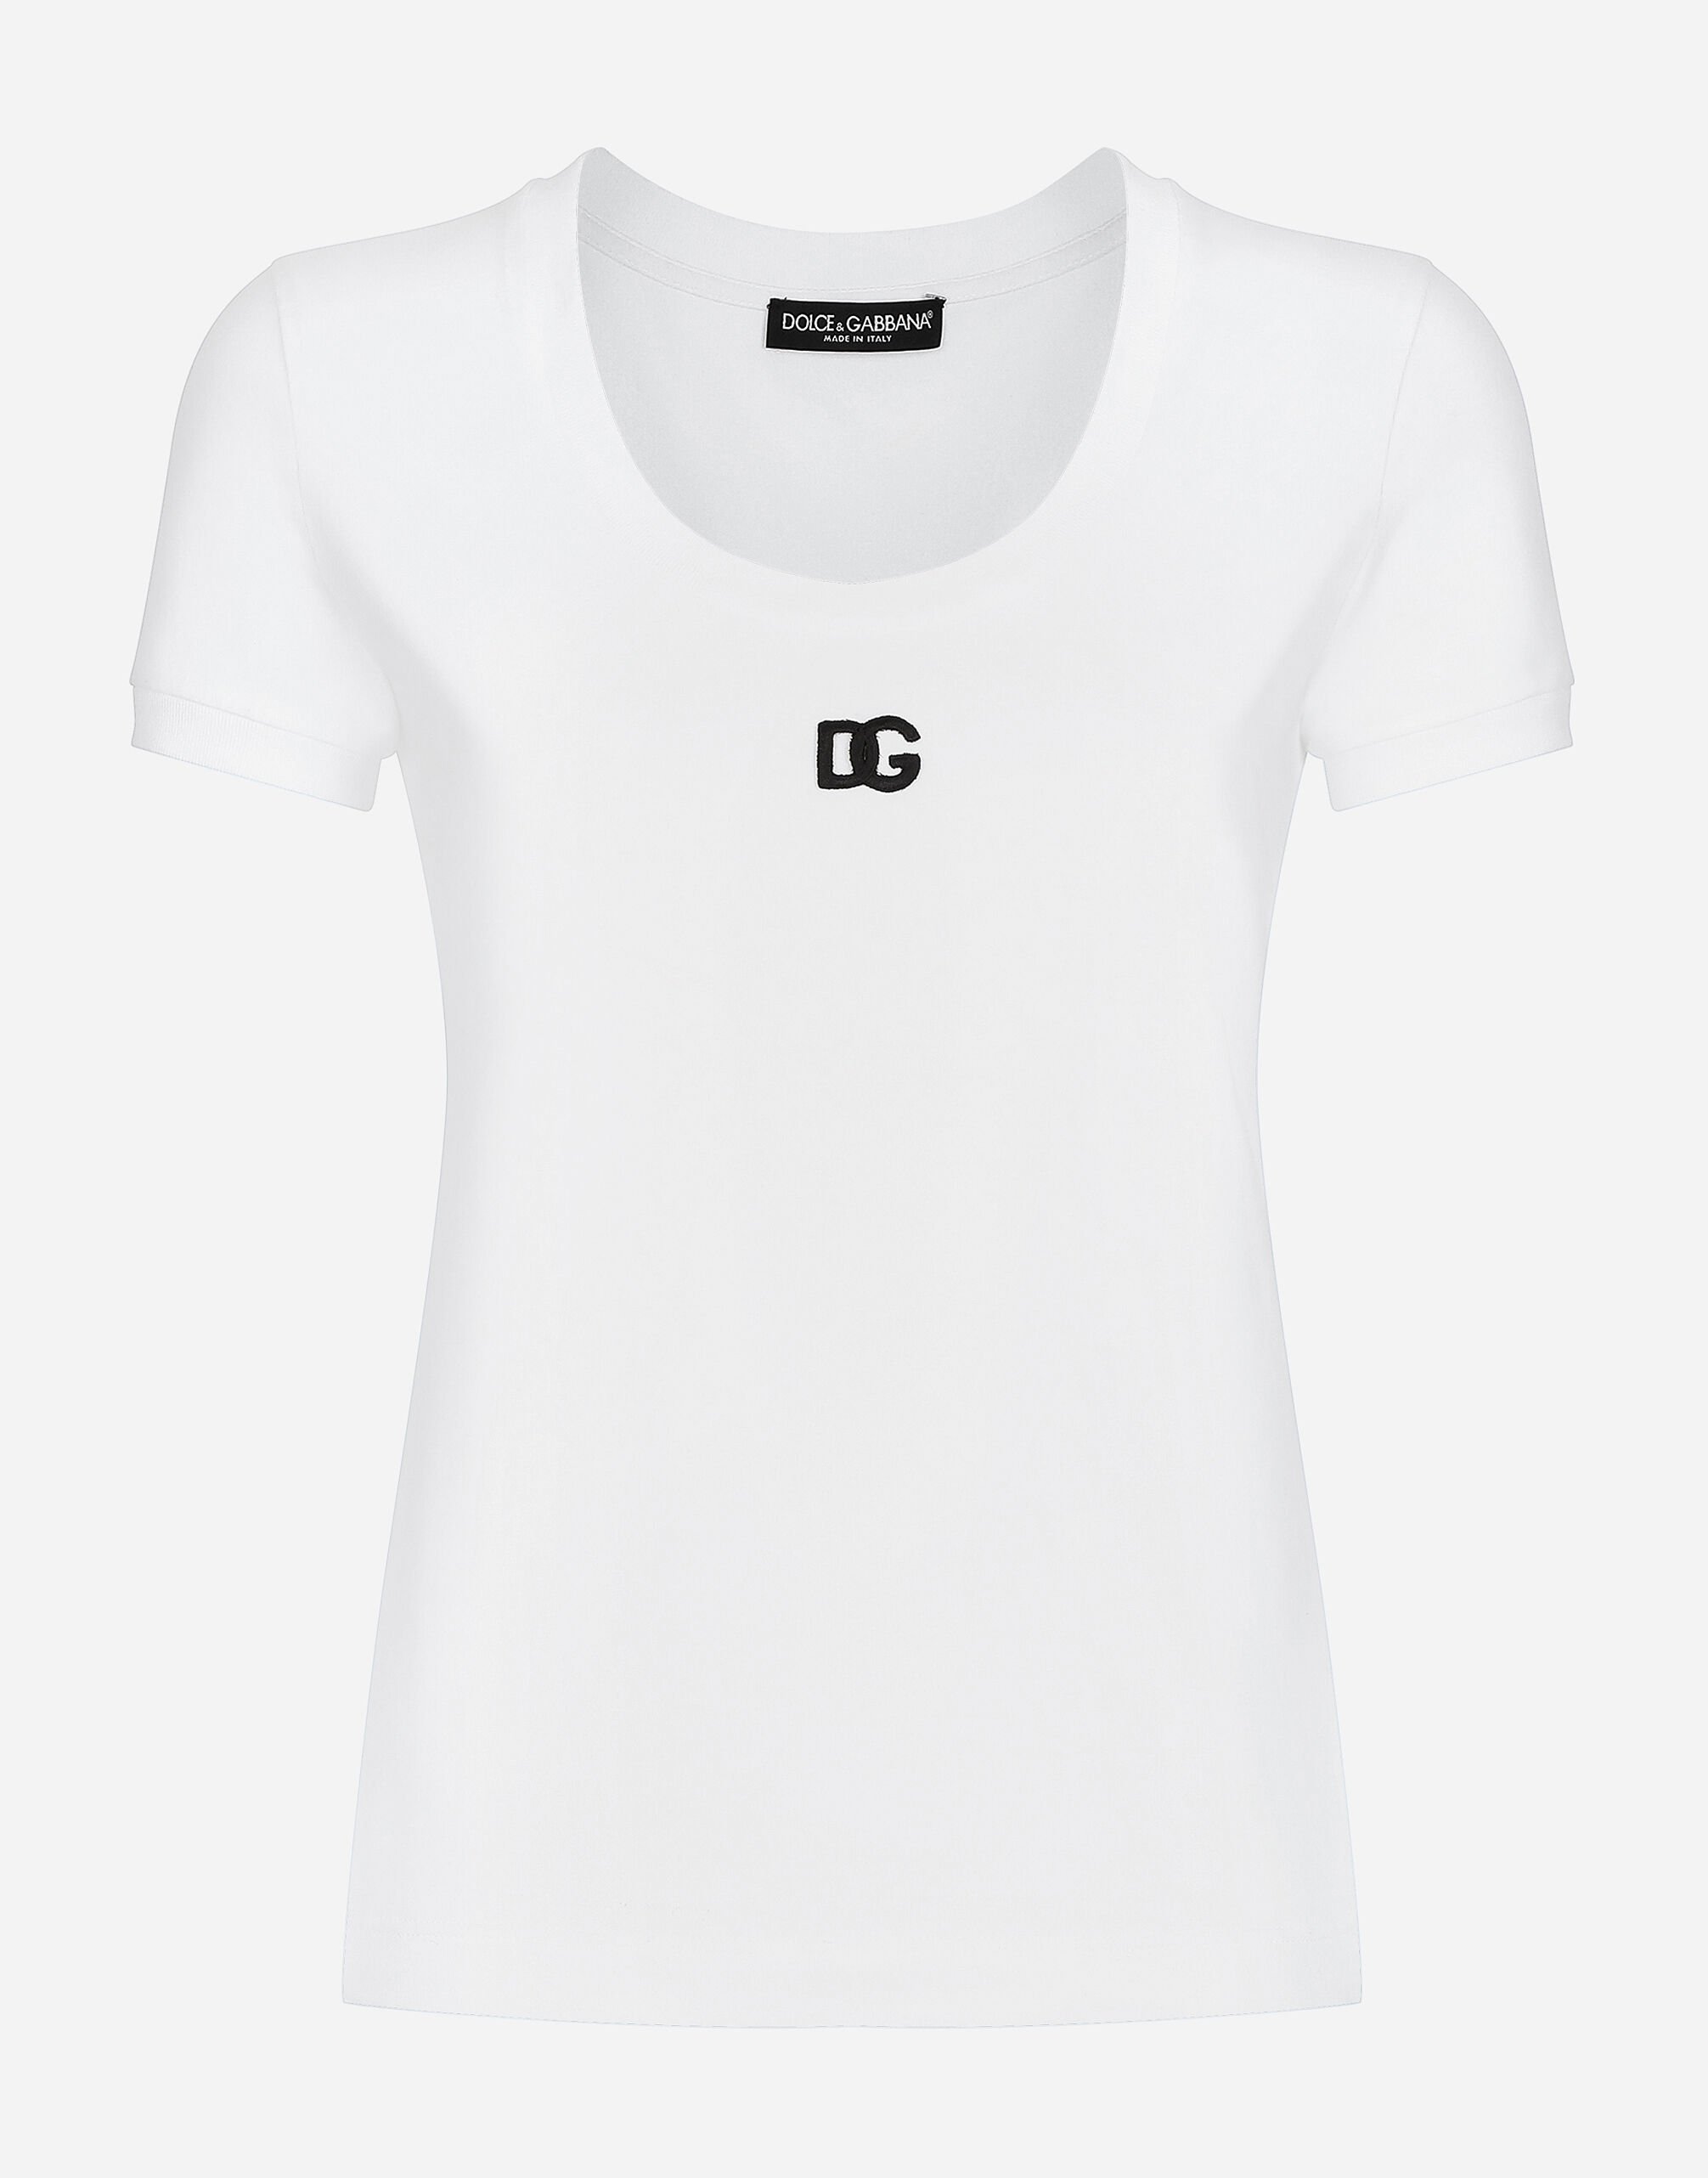 Dolce & Gabbana Jersey T-shirt with DG logo White F9R58ZGDCBG